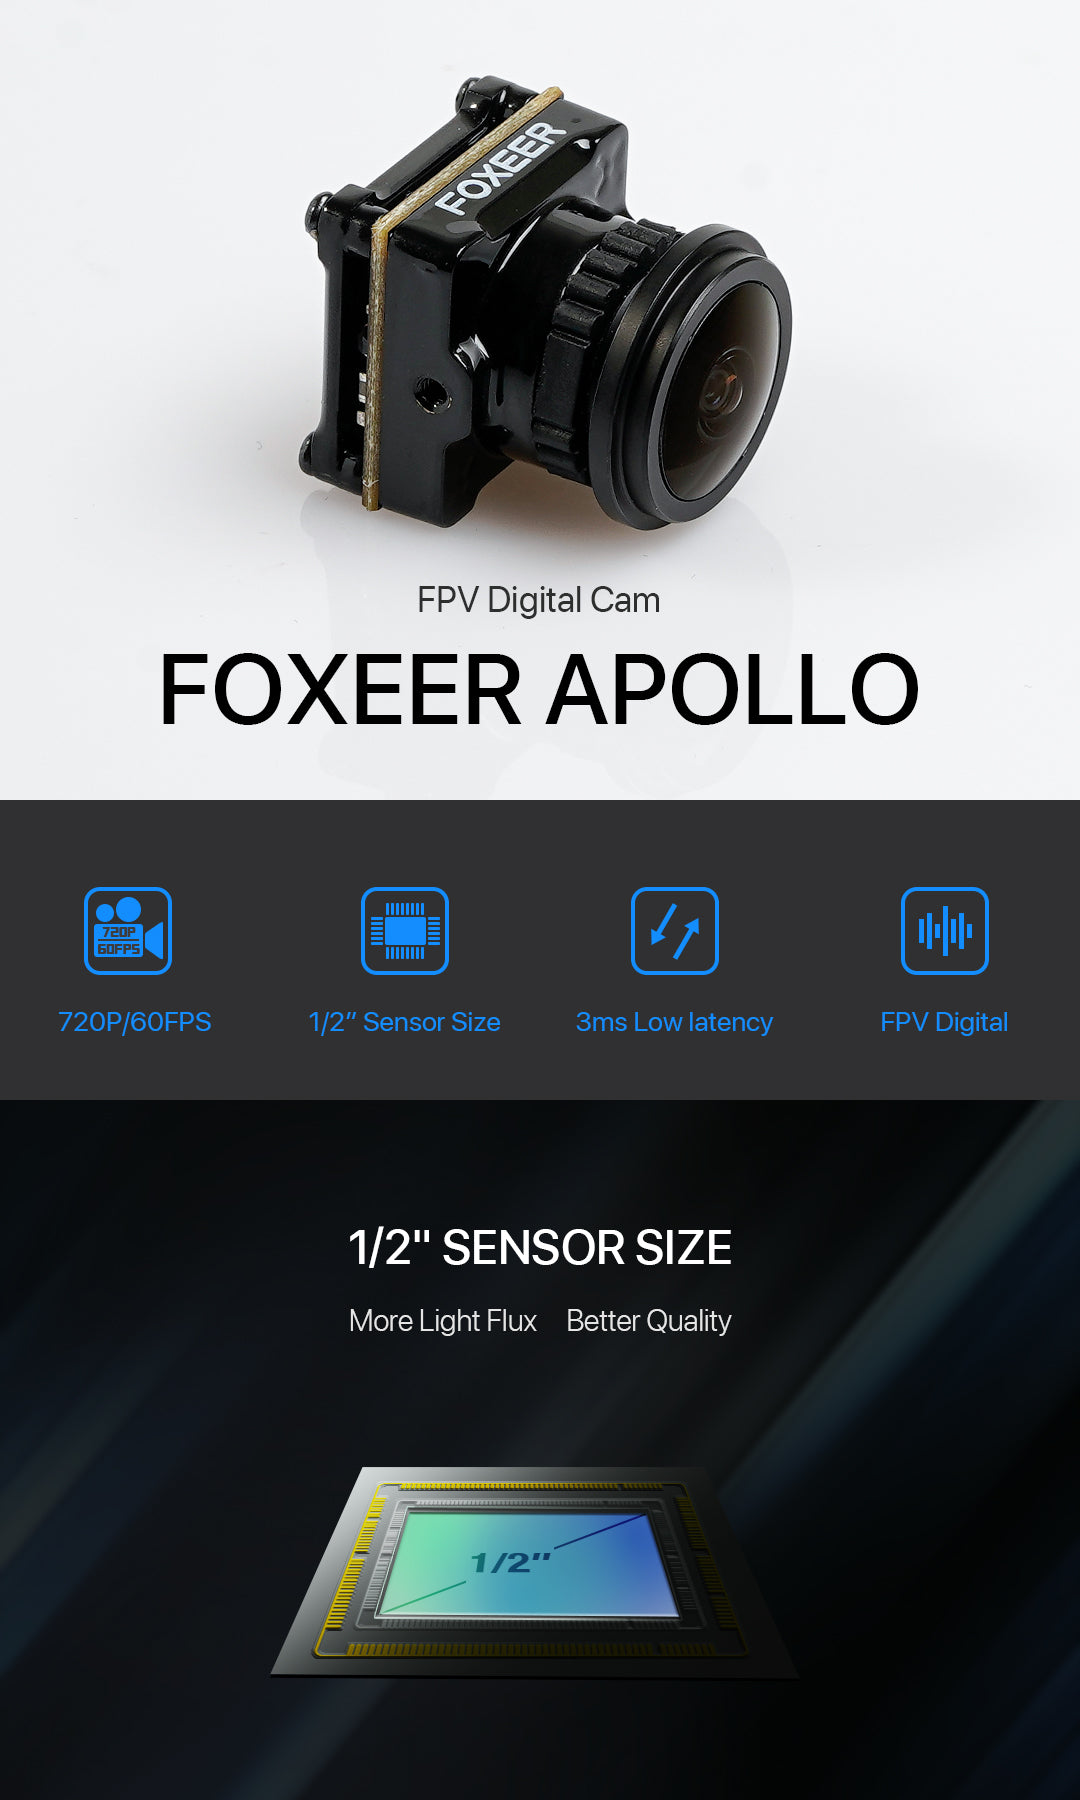 Foxeer Apollo DJI Digital 720P 60fps Low Latency FPV Camera Specifications